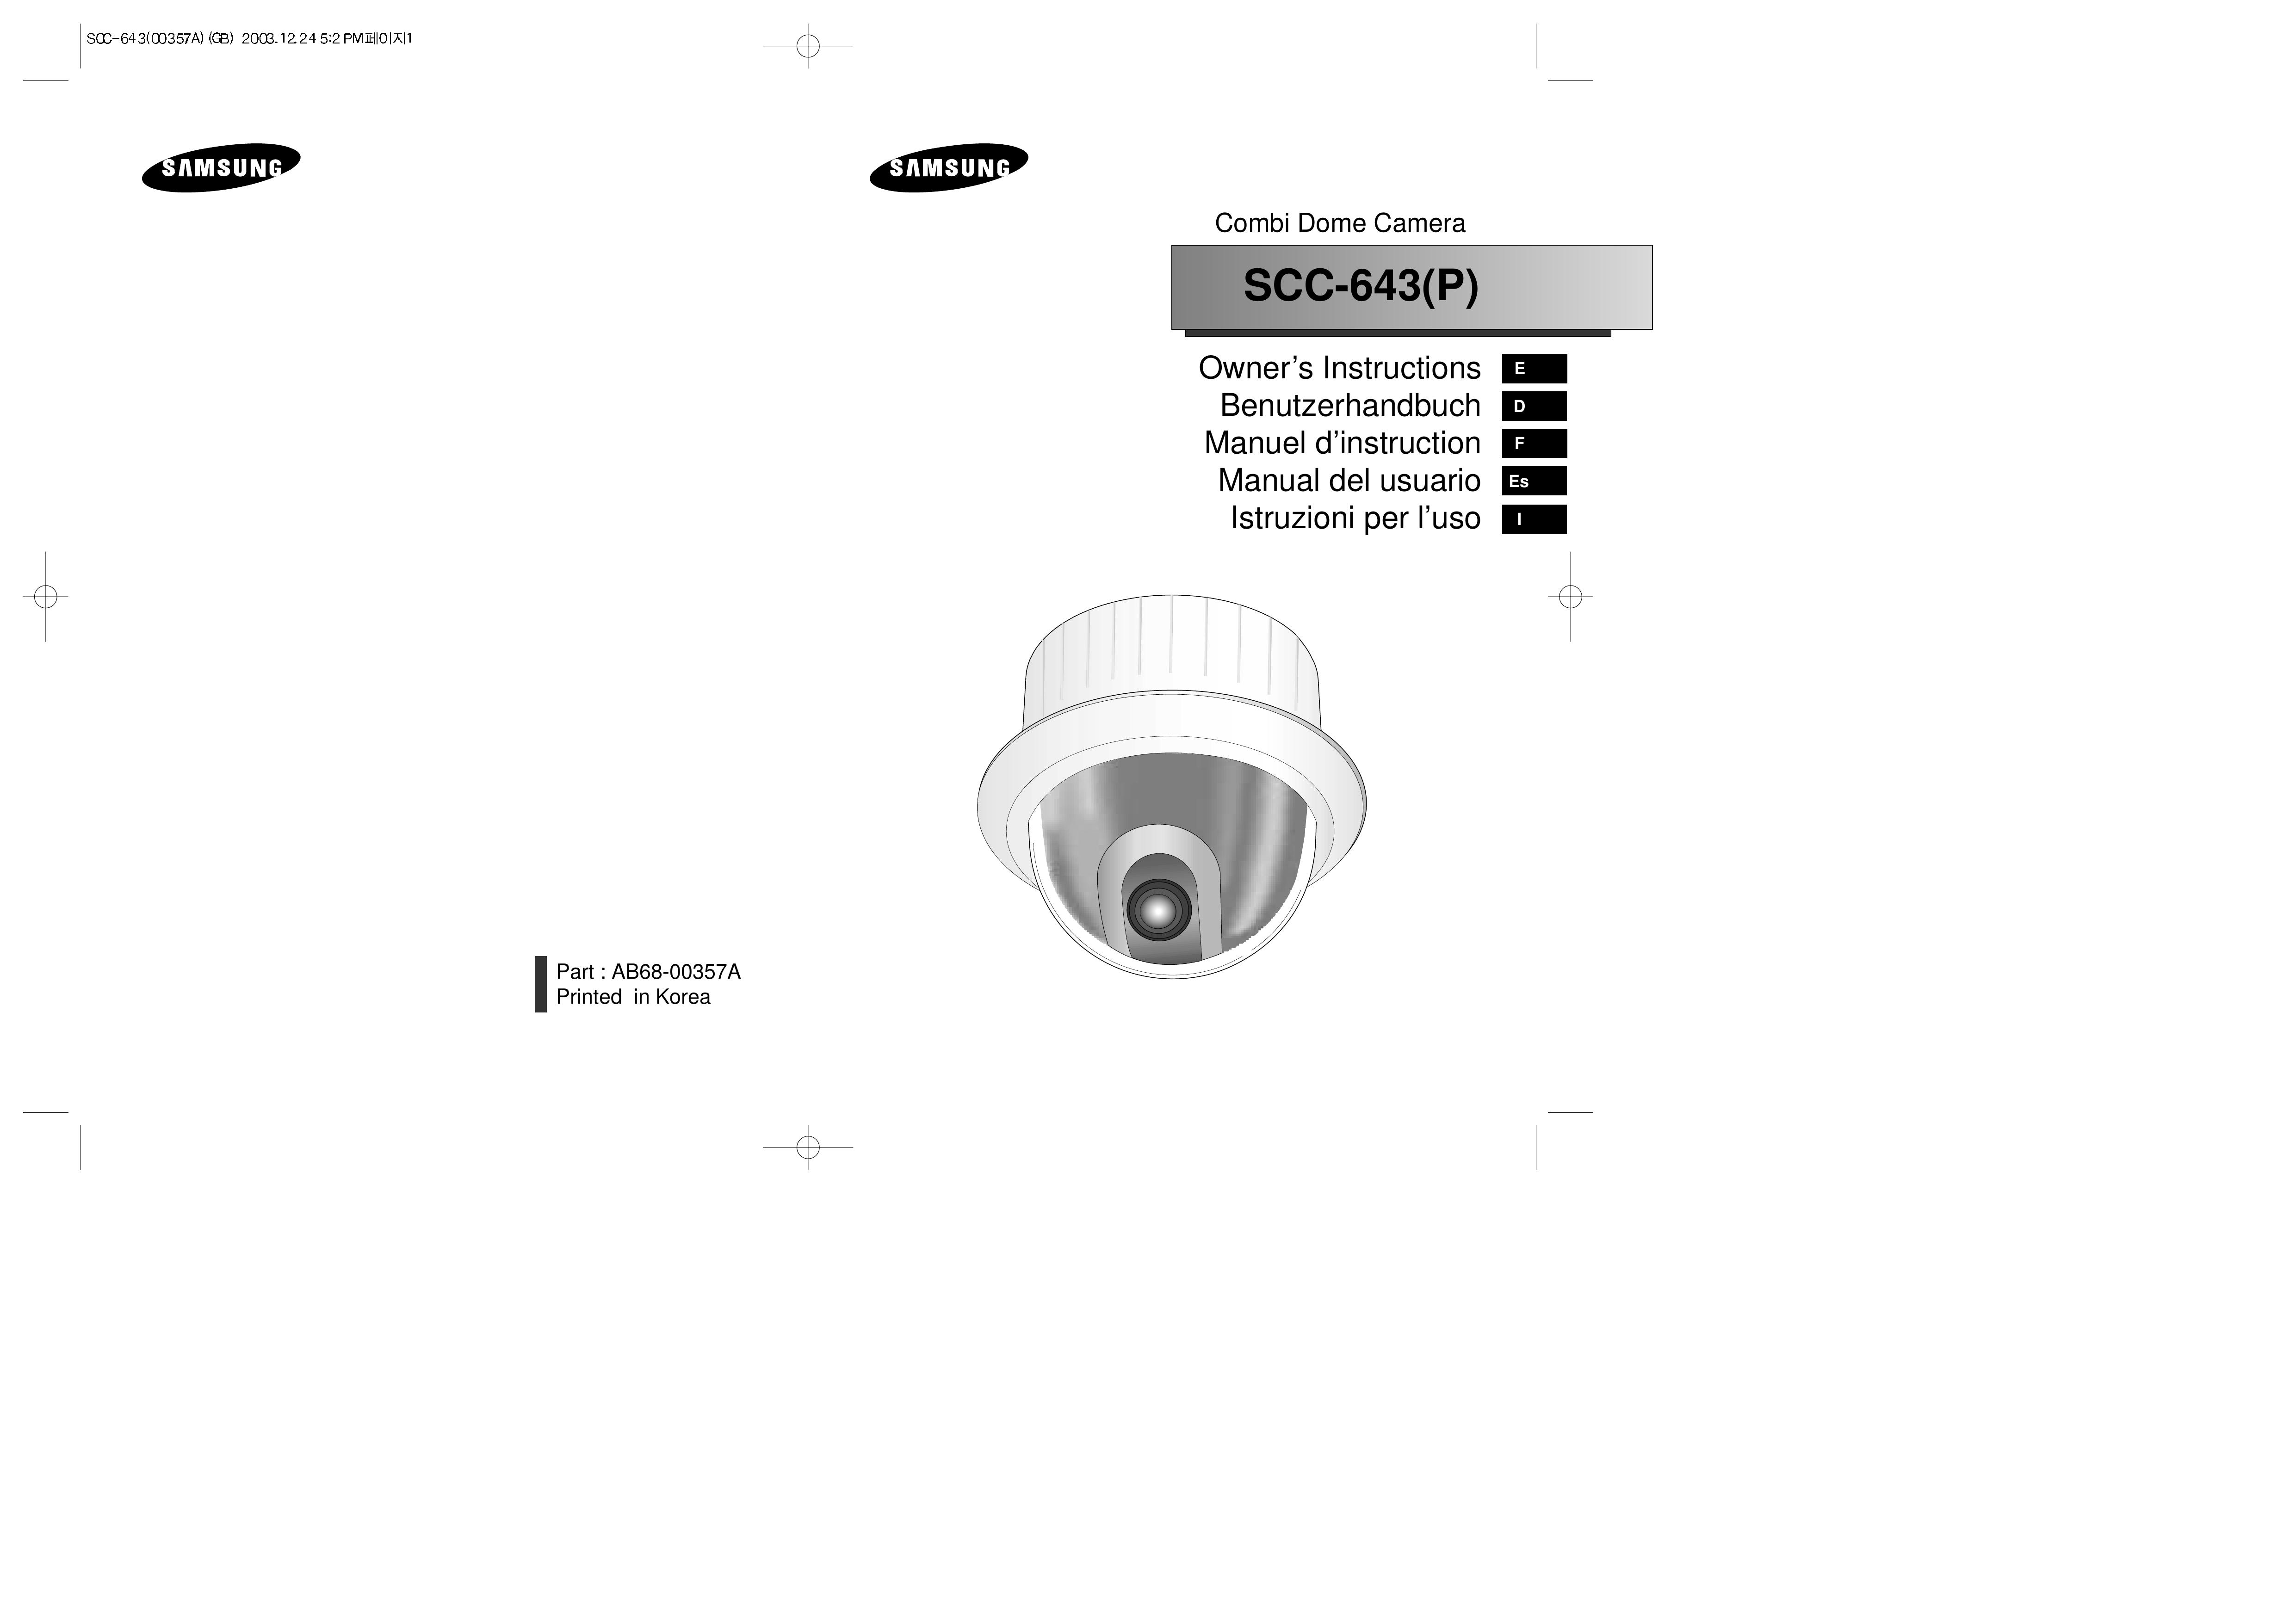 Samsung SCC-643(P) Security Camera User Manual